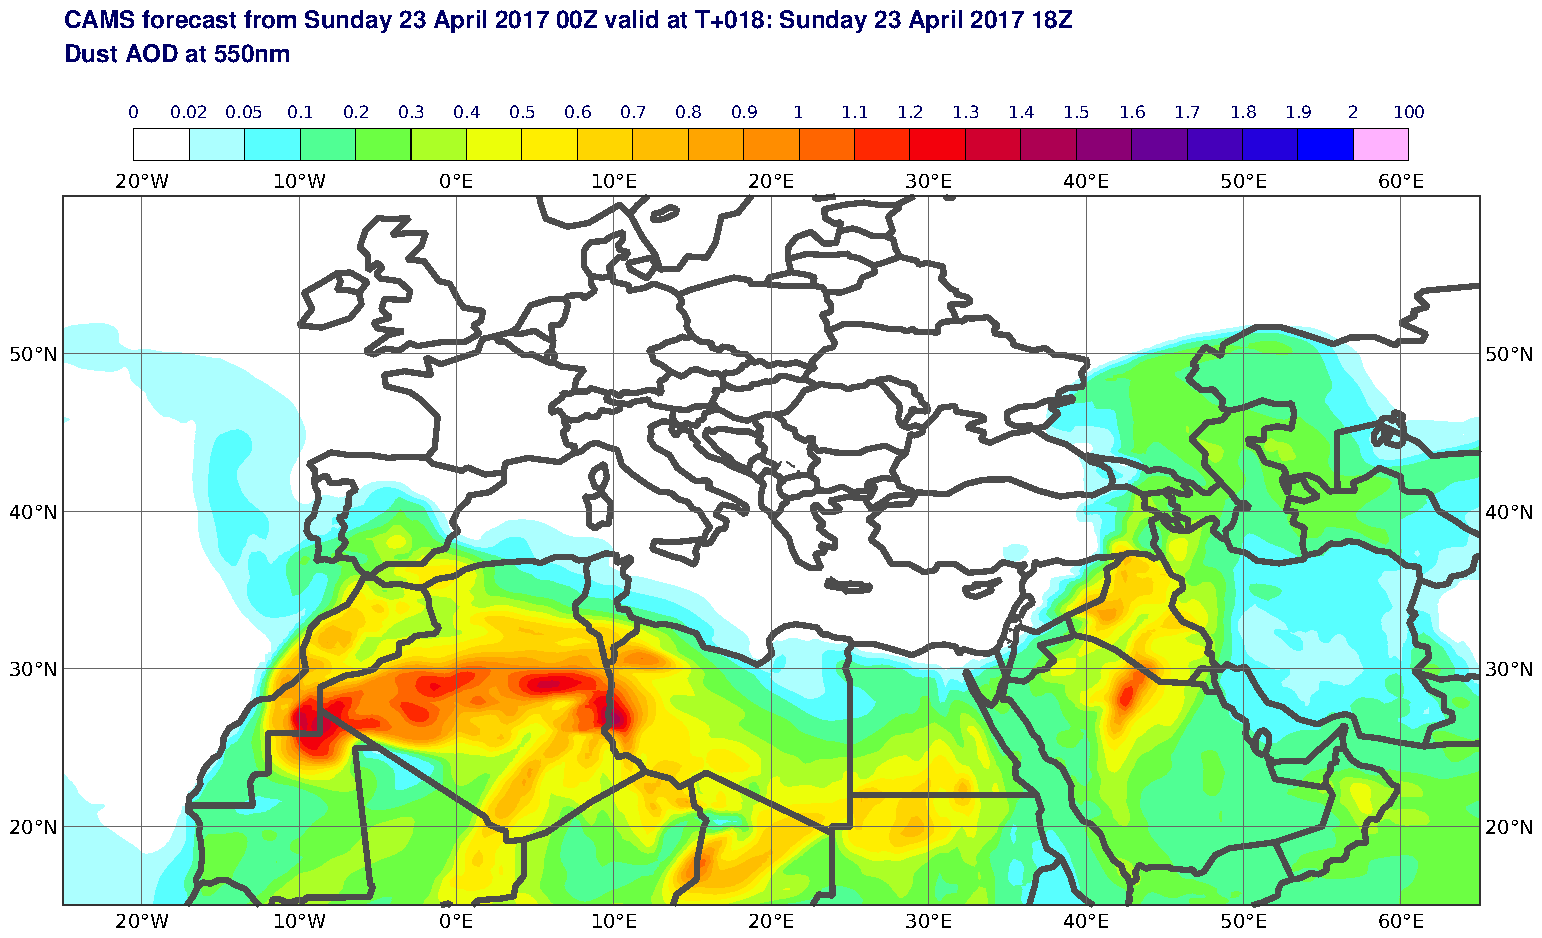 Dust AOD at 550nm valid at T18 - 2017-04-23 18:00